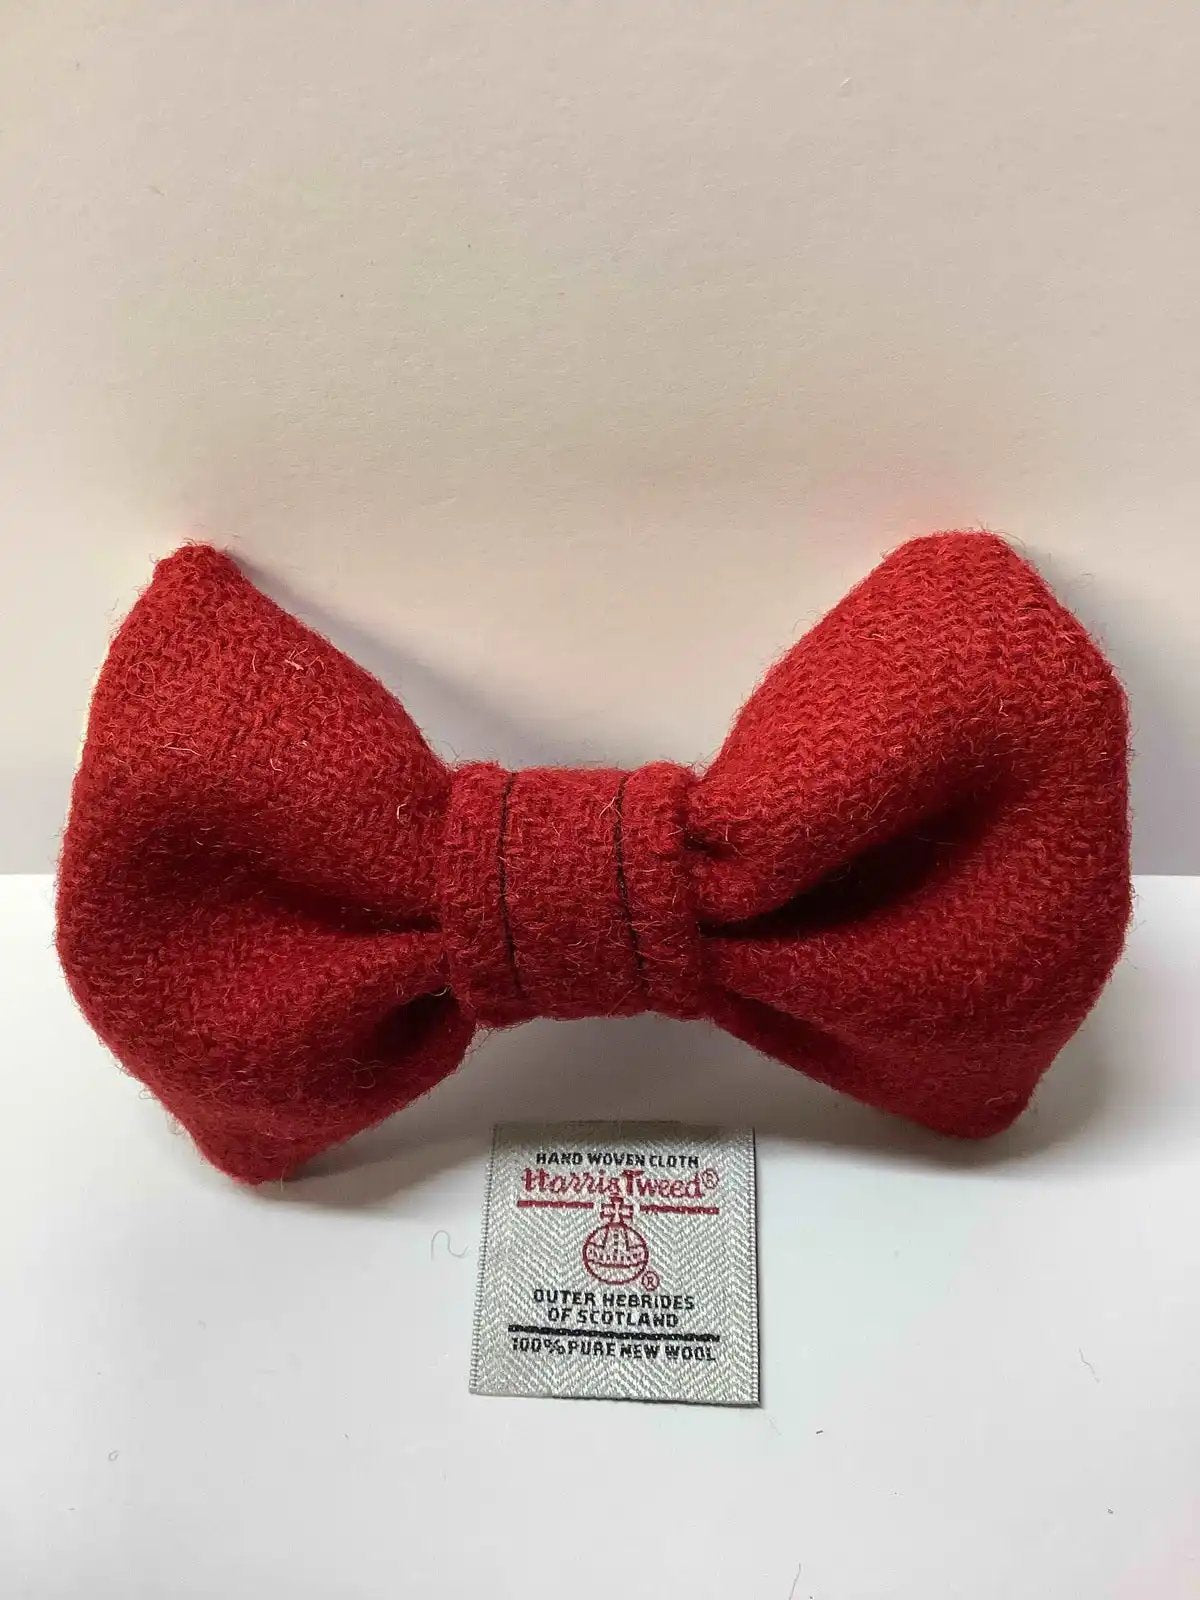 Harris tweed dog bow tie, Red, Medium